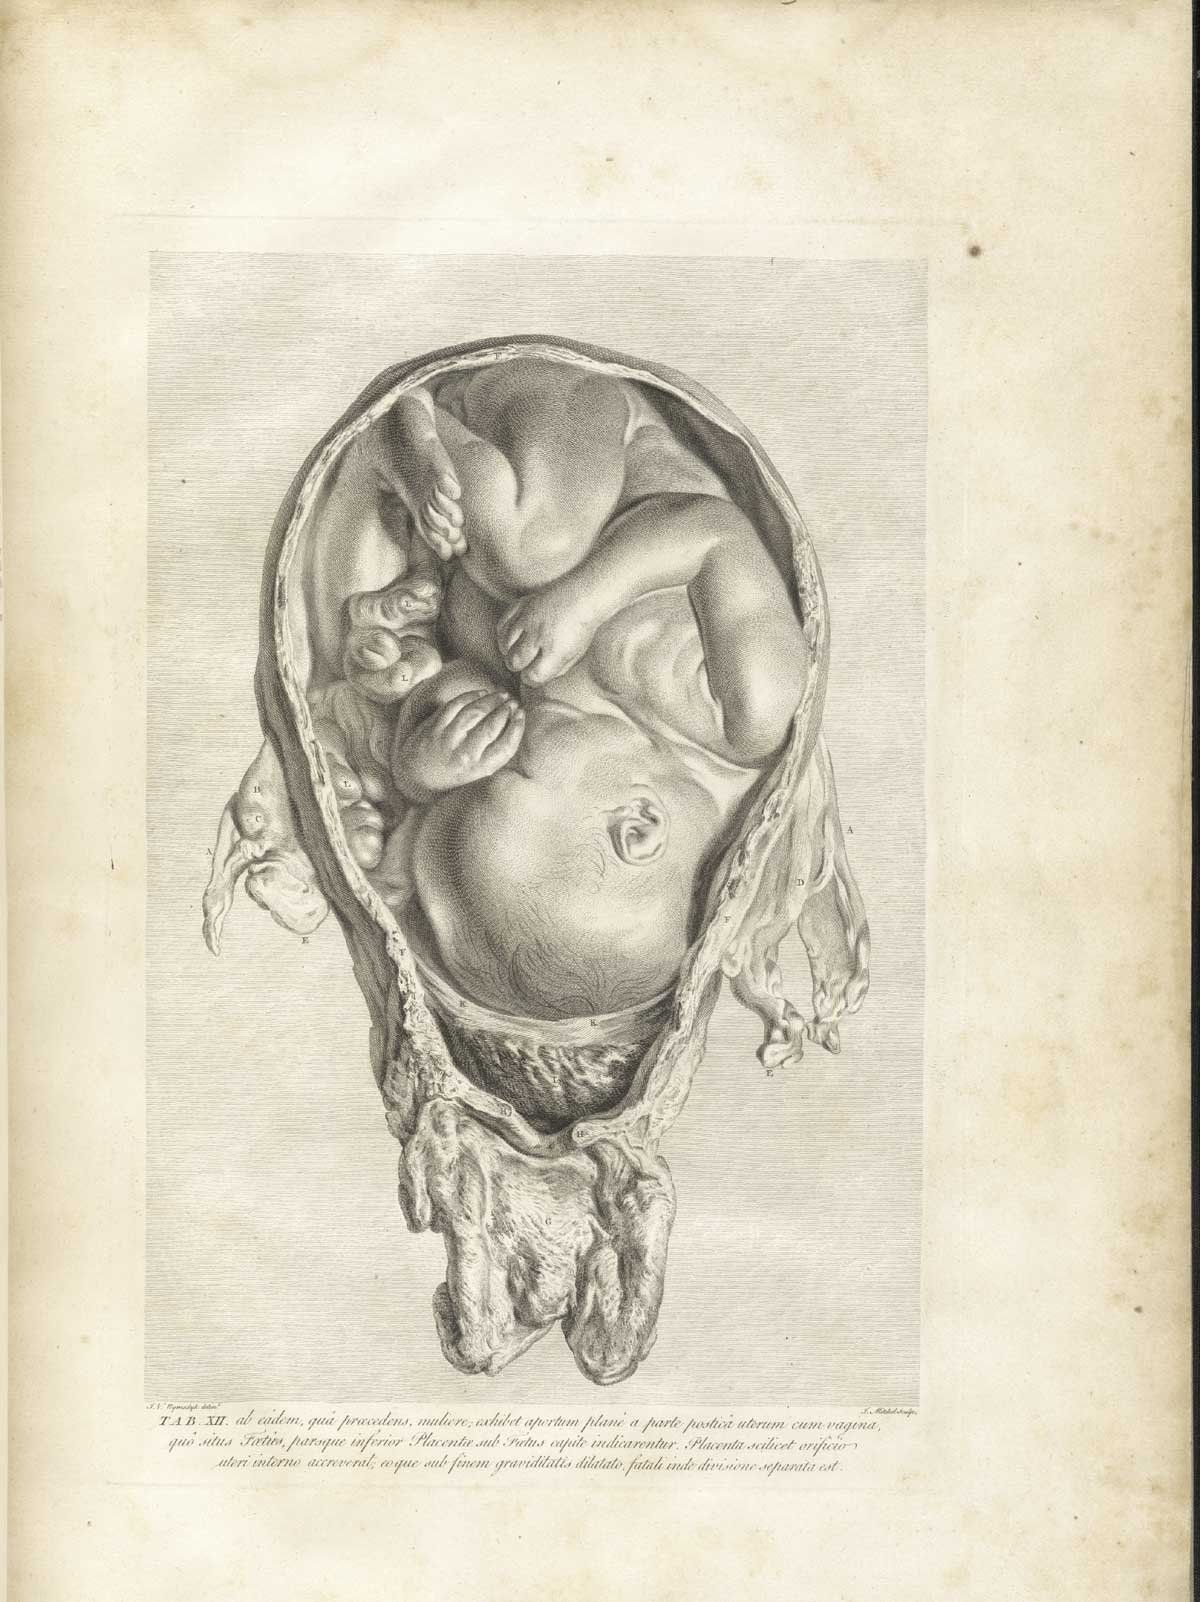 Table 12 of William Hunter's Anatomia uteri humani gravidi tabulis illustrata, featuring the cross section of a detached uterus with a fetus inside.